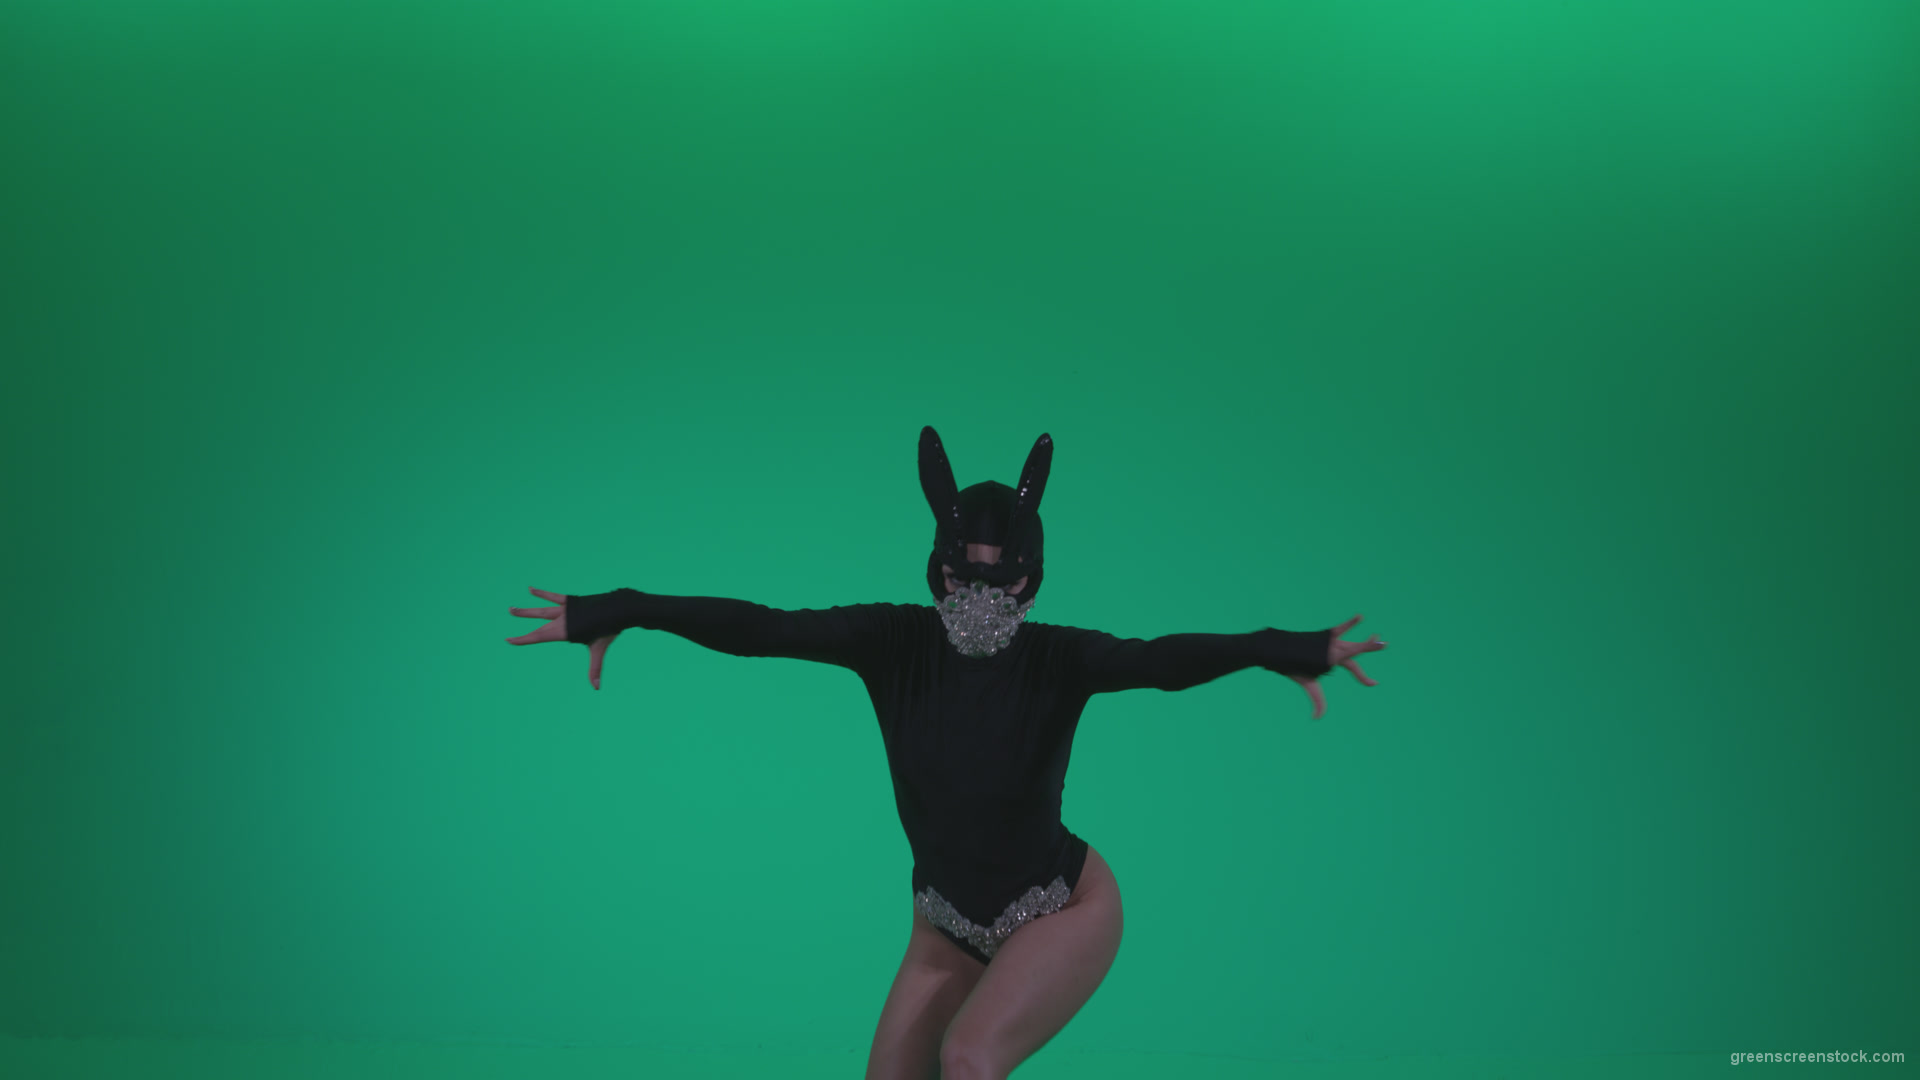 Go-go-Dancer-Black-Rabbit-u12-Green-Screen-Video-Footage_005 Green Screen Stock